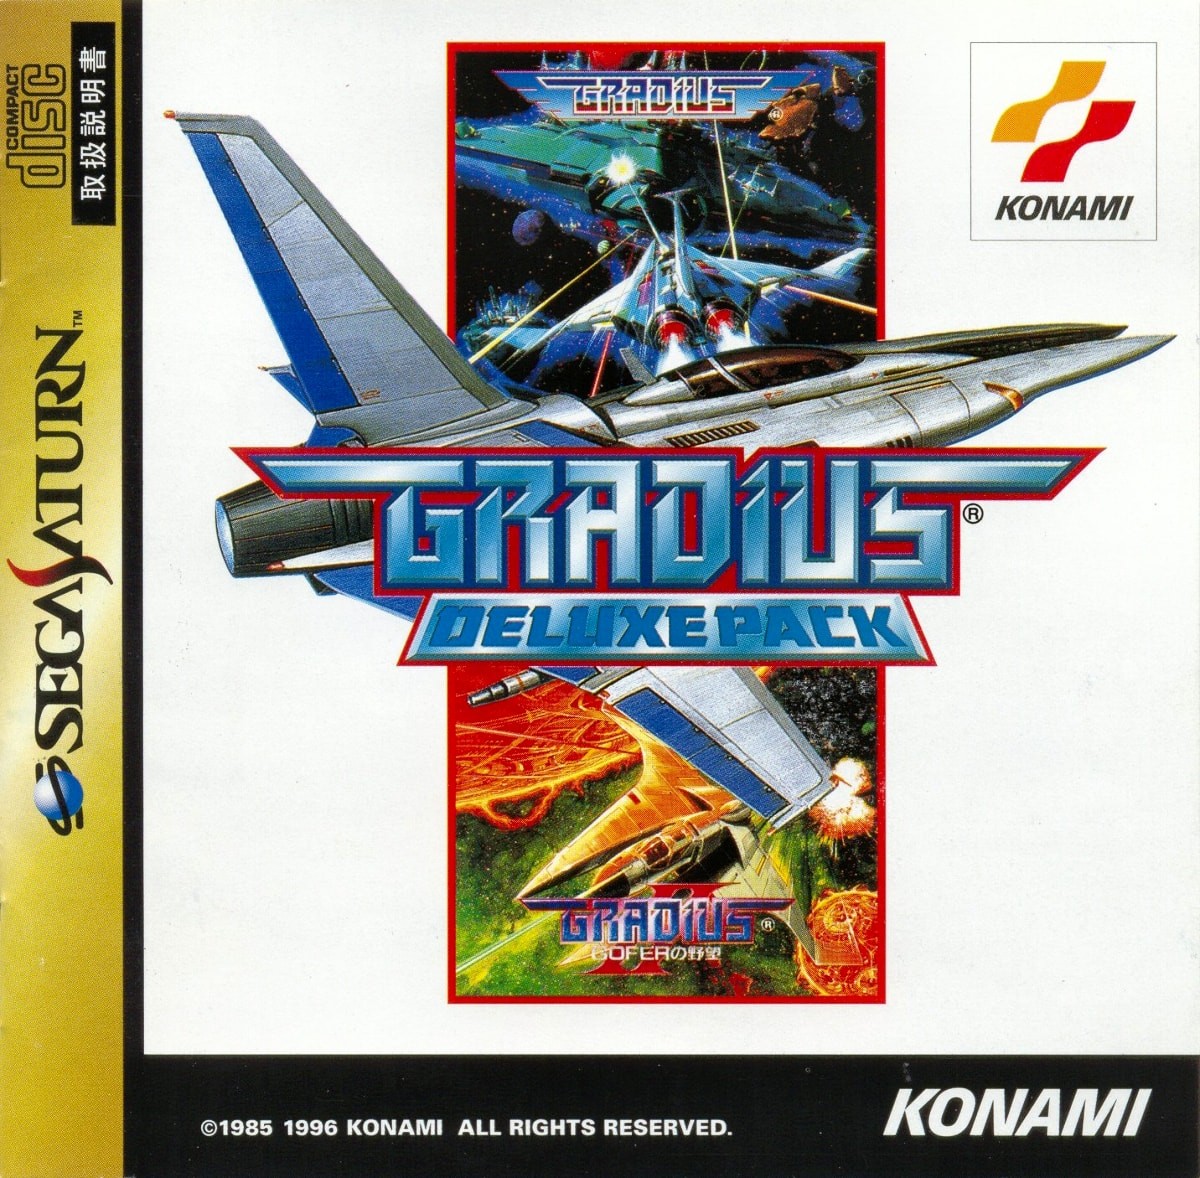 Capa do jogo Gradius Deluxe Pack